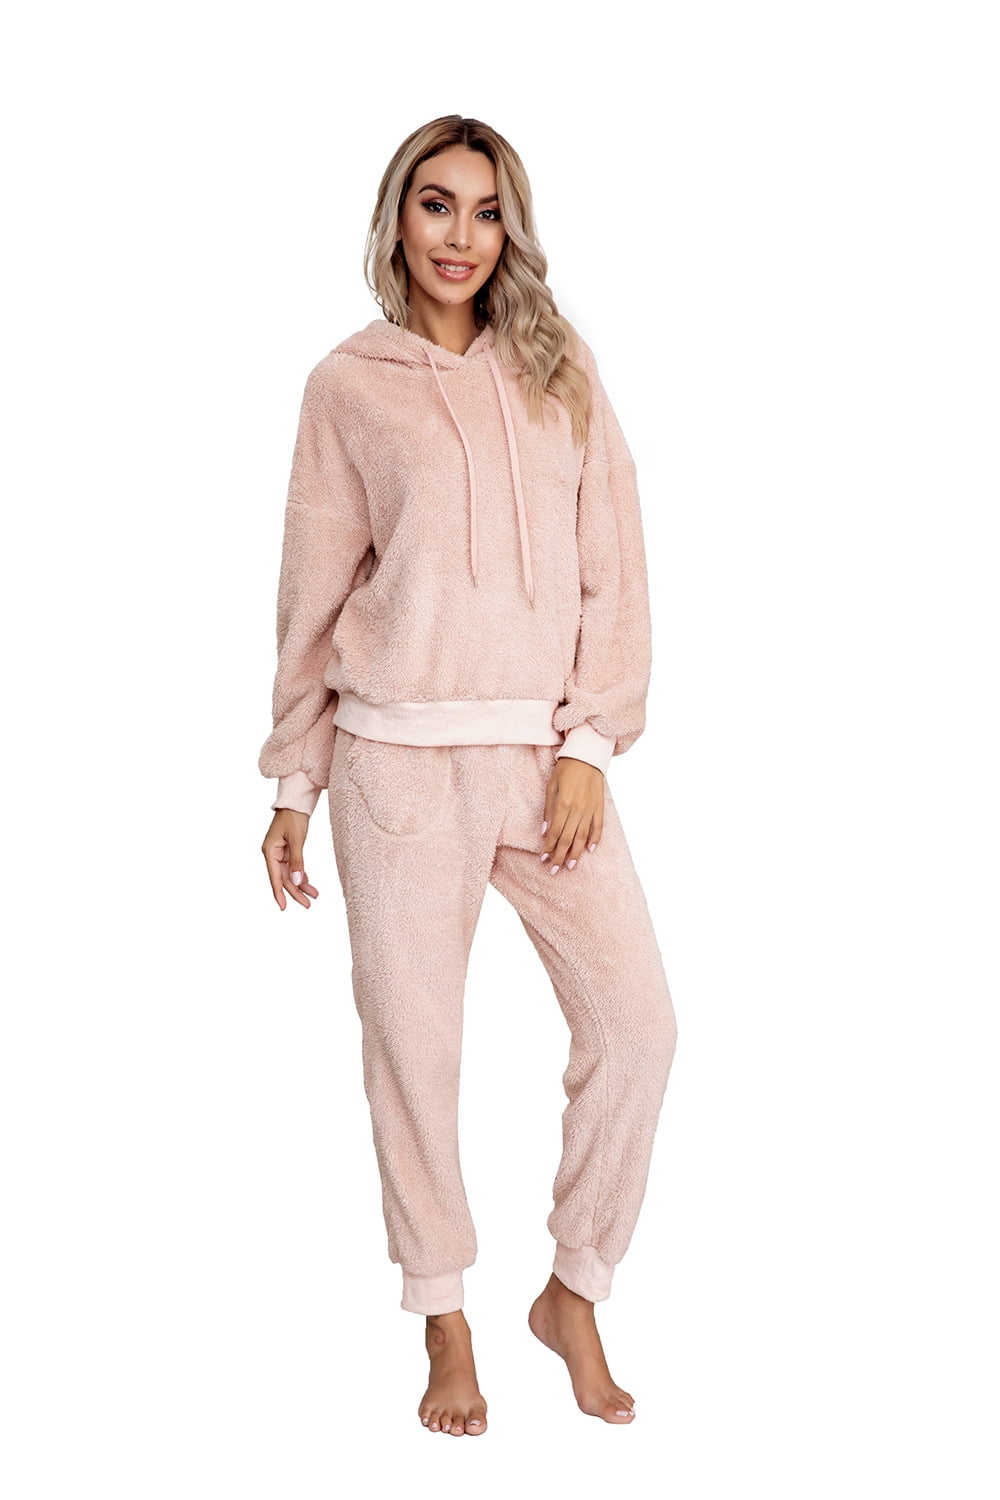 Womens Fuzzy Sherpa Fleece Pajamas Set, Long Sleeve Hoodies Pajama Pants 2  Piece Outfits Loungewear Sleepwear